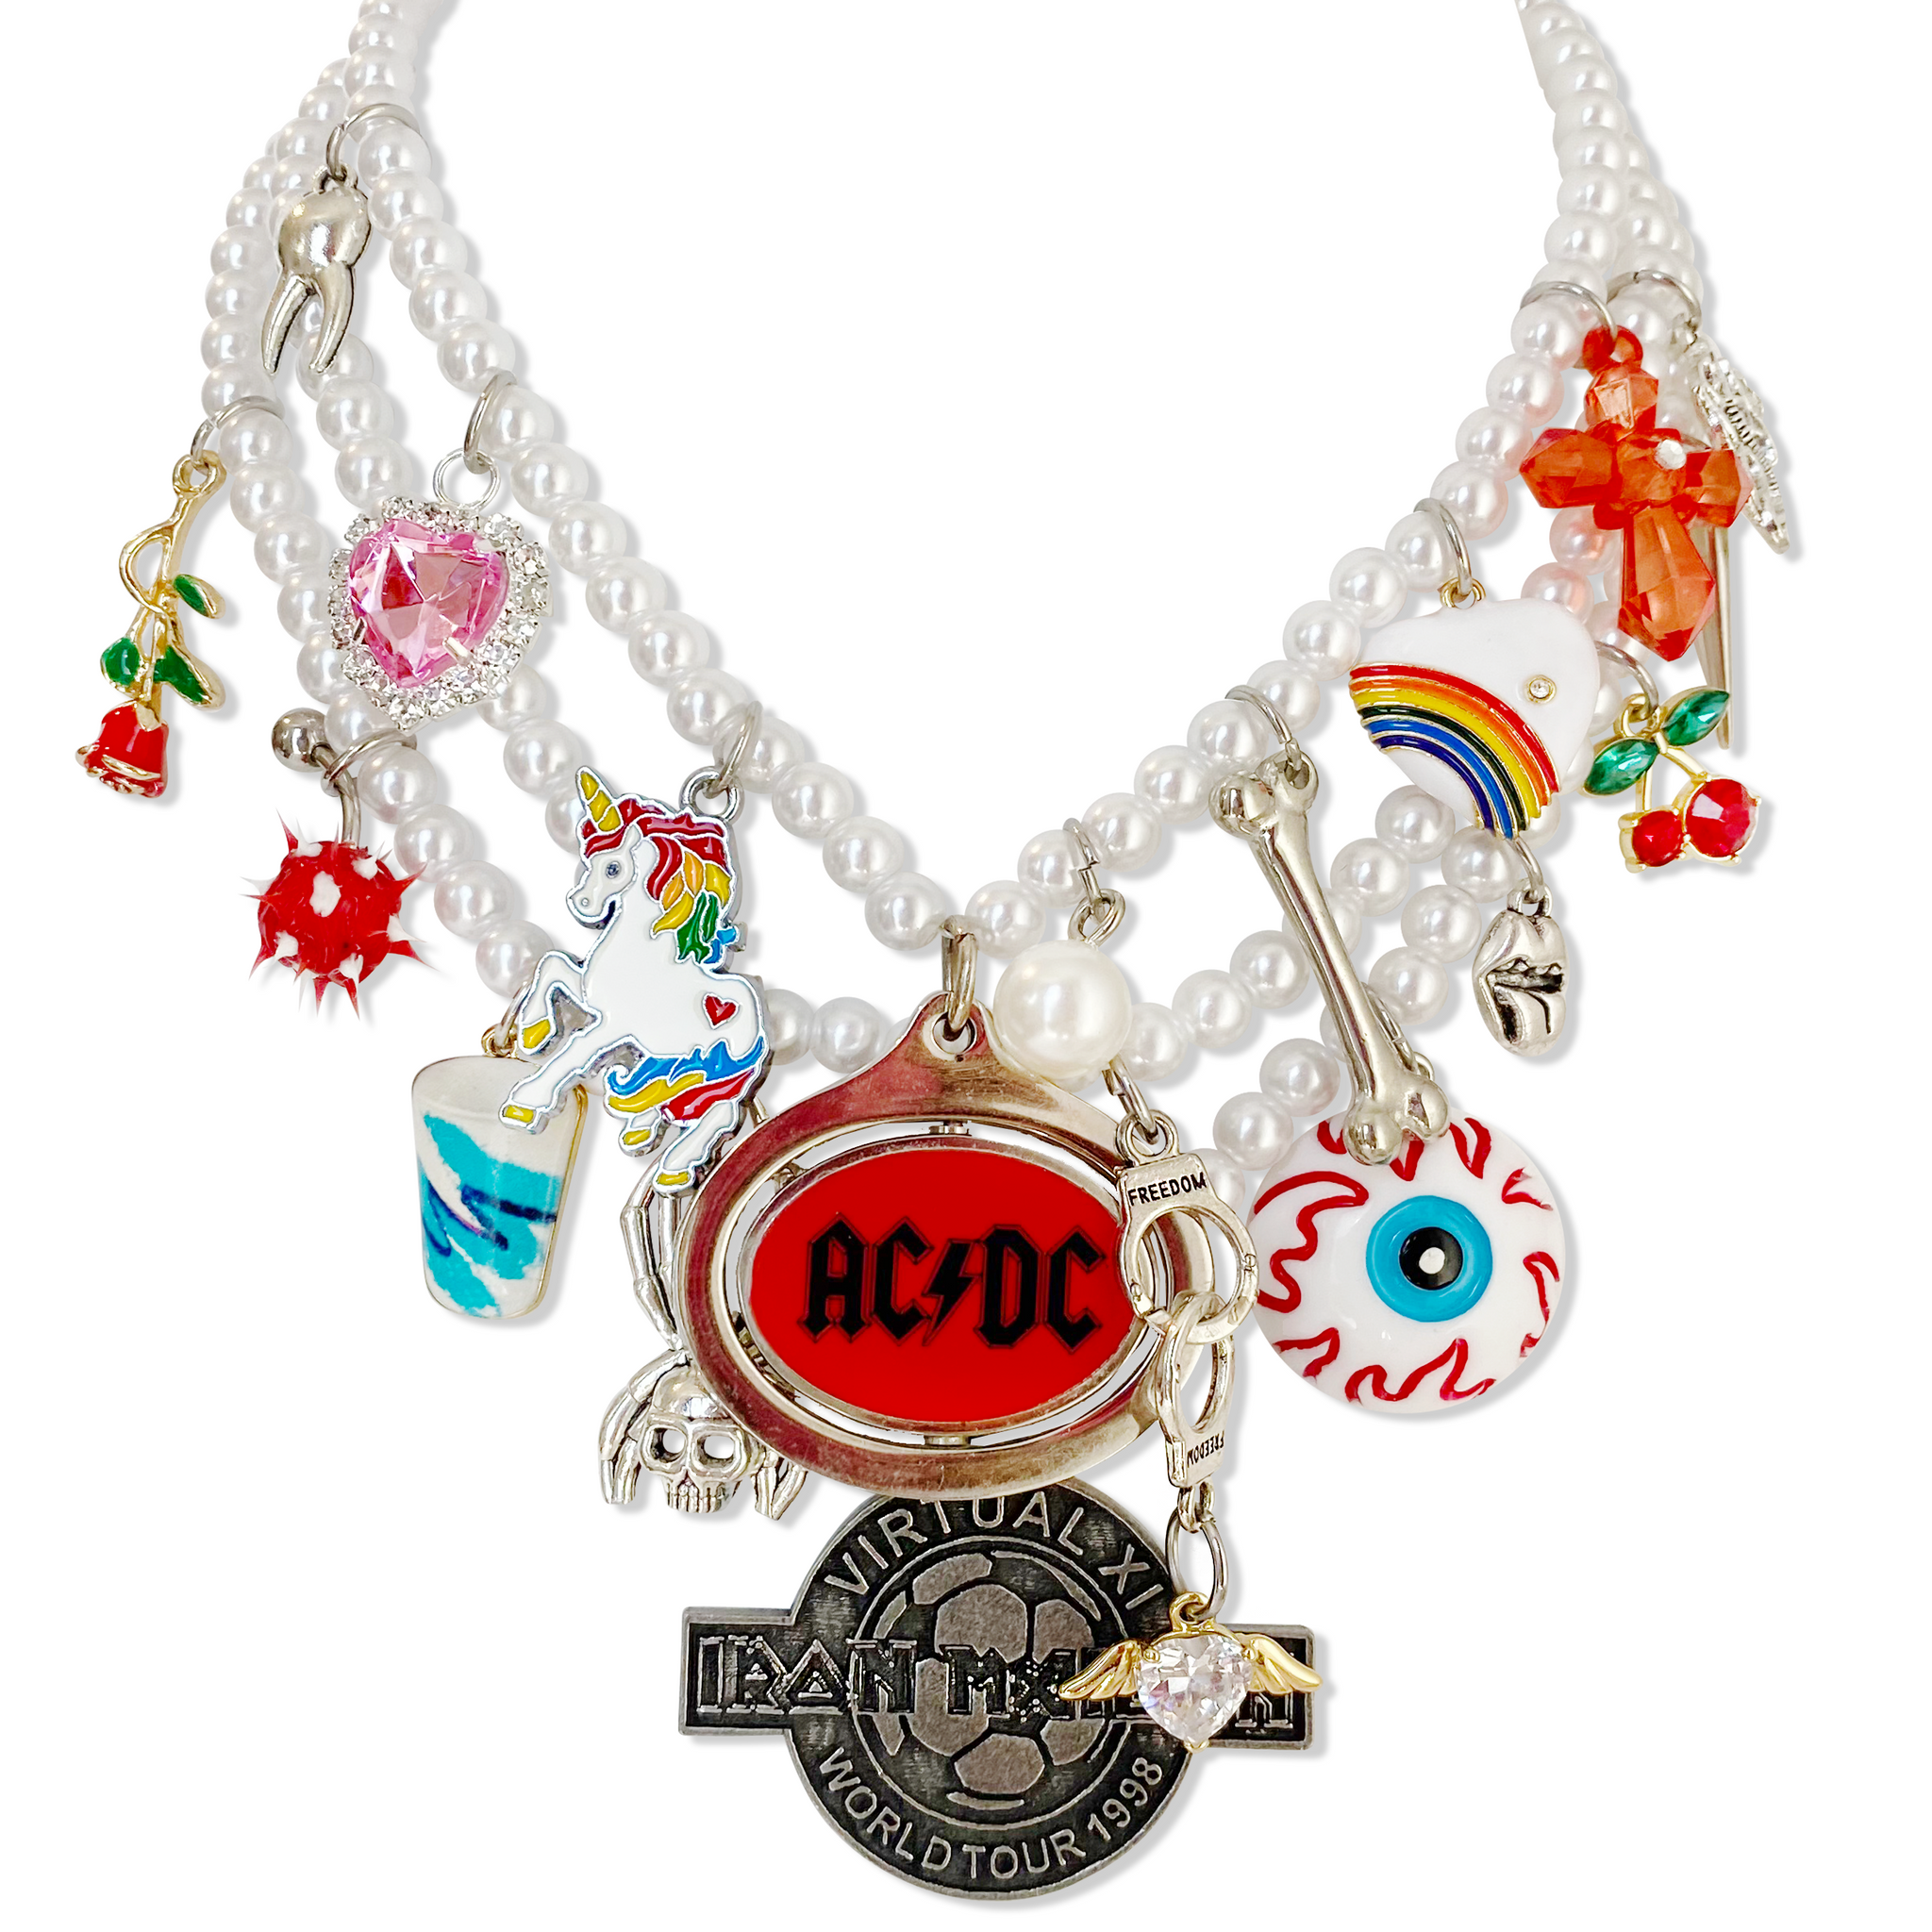 Iron Maiden/ACDC Vintage Remix Charm Necklace